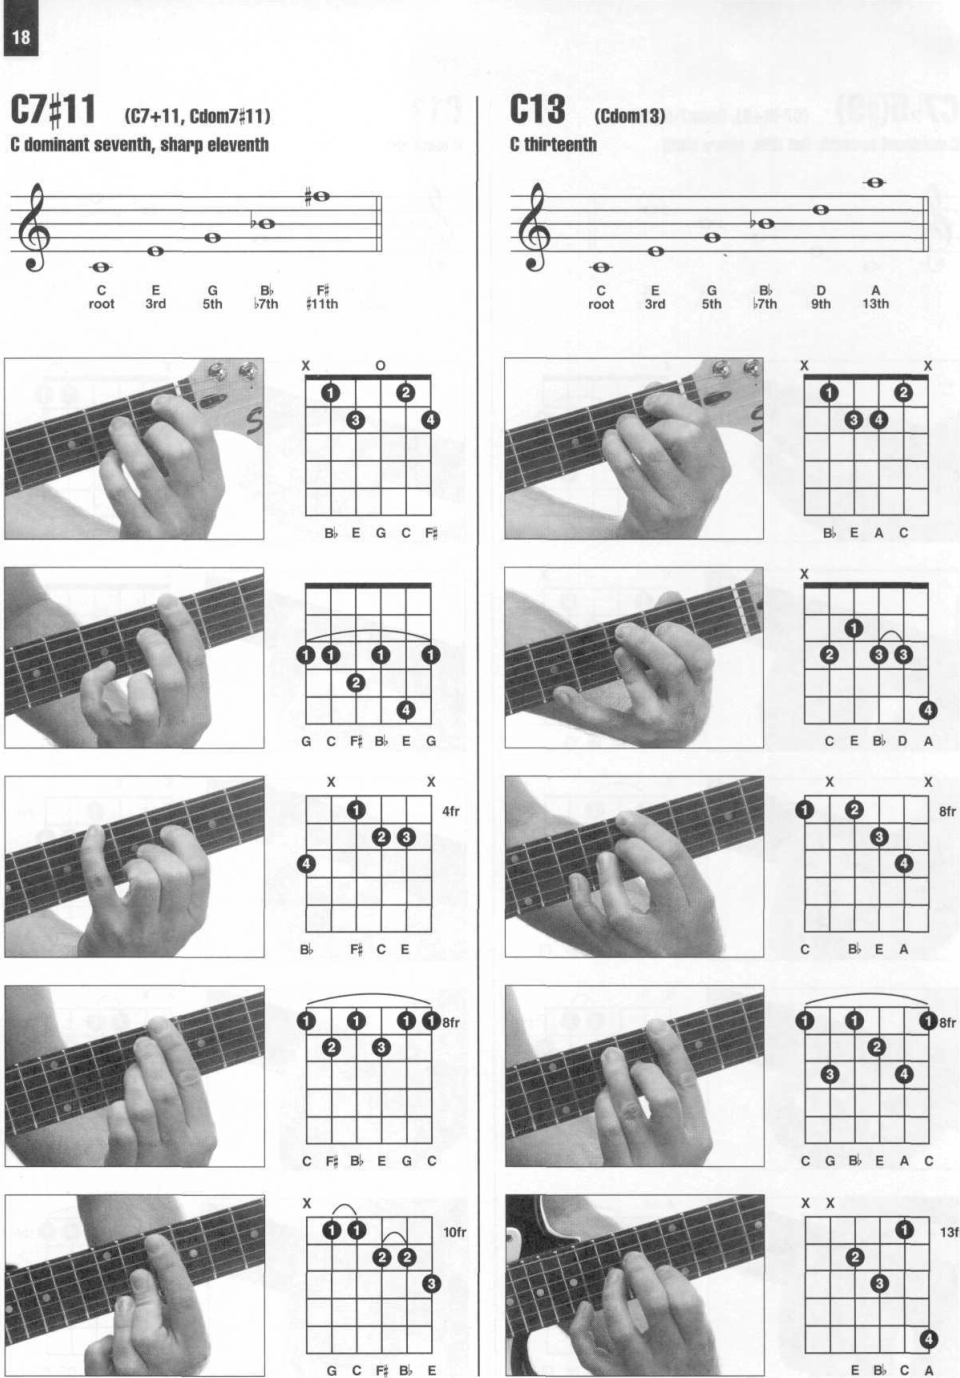 Pages from Enciclopedia visual de acordes de guitarra HAL LEONARD Page 018.png